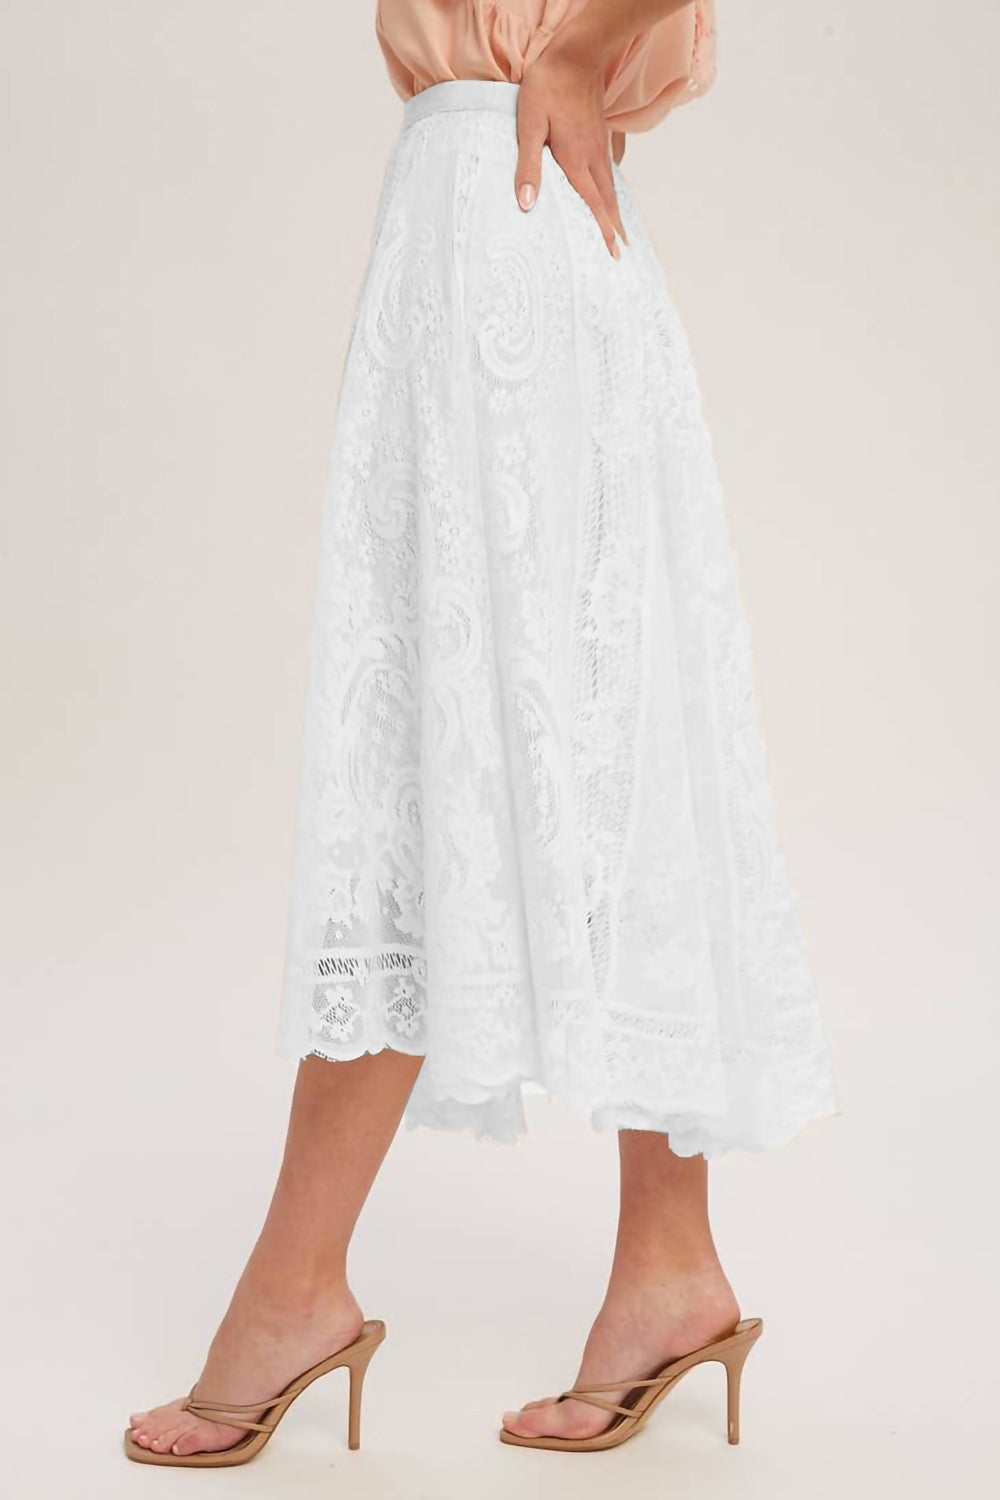 TEEK - Lace High Waist Midi Skirt SKIRT TEEK Trend White S 